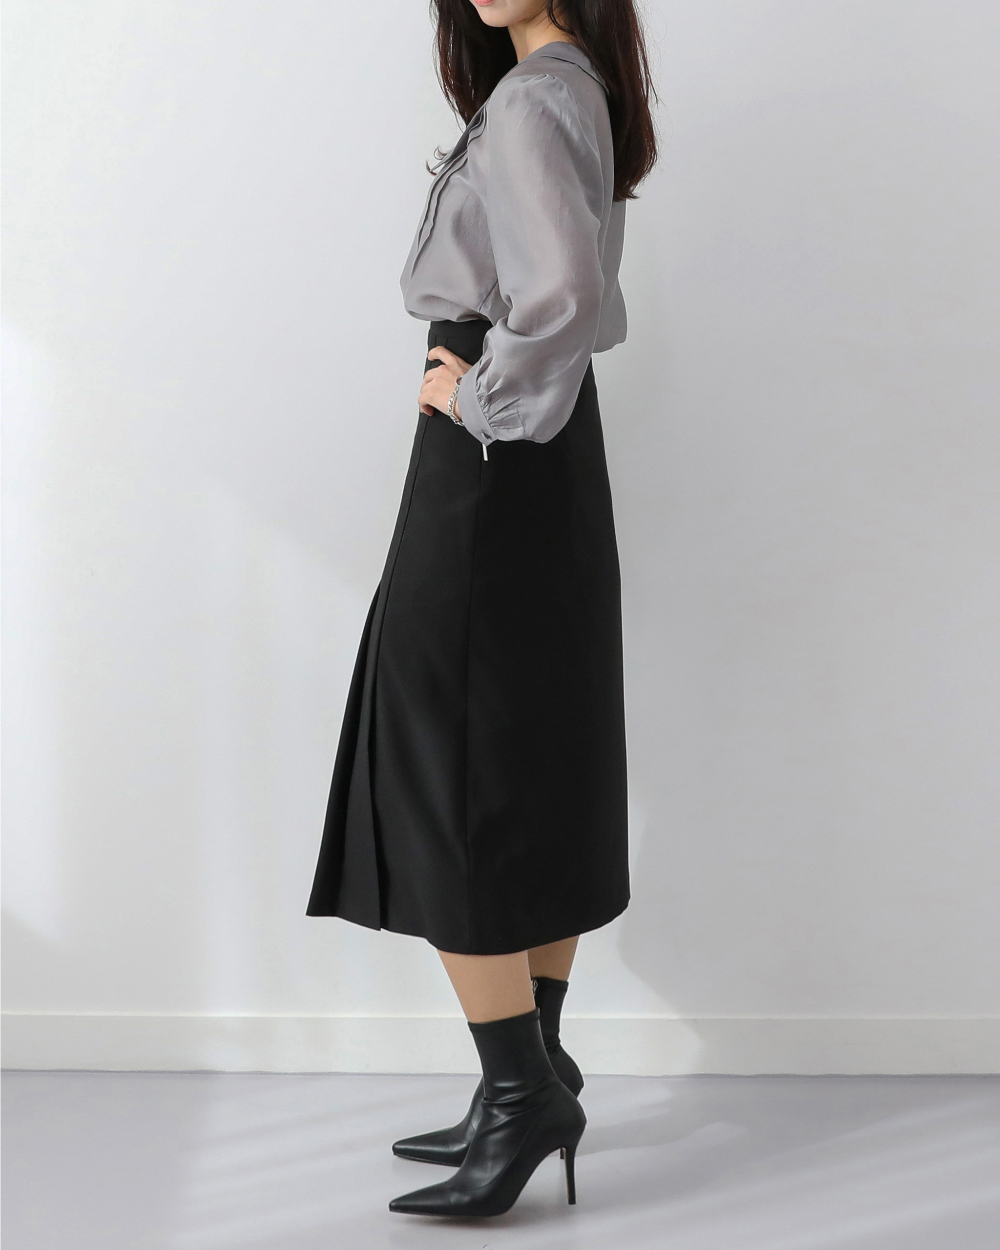 blouse model image-S4L5